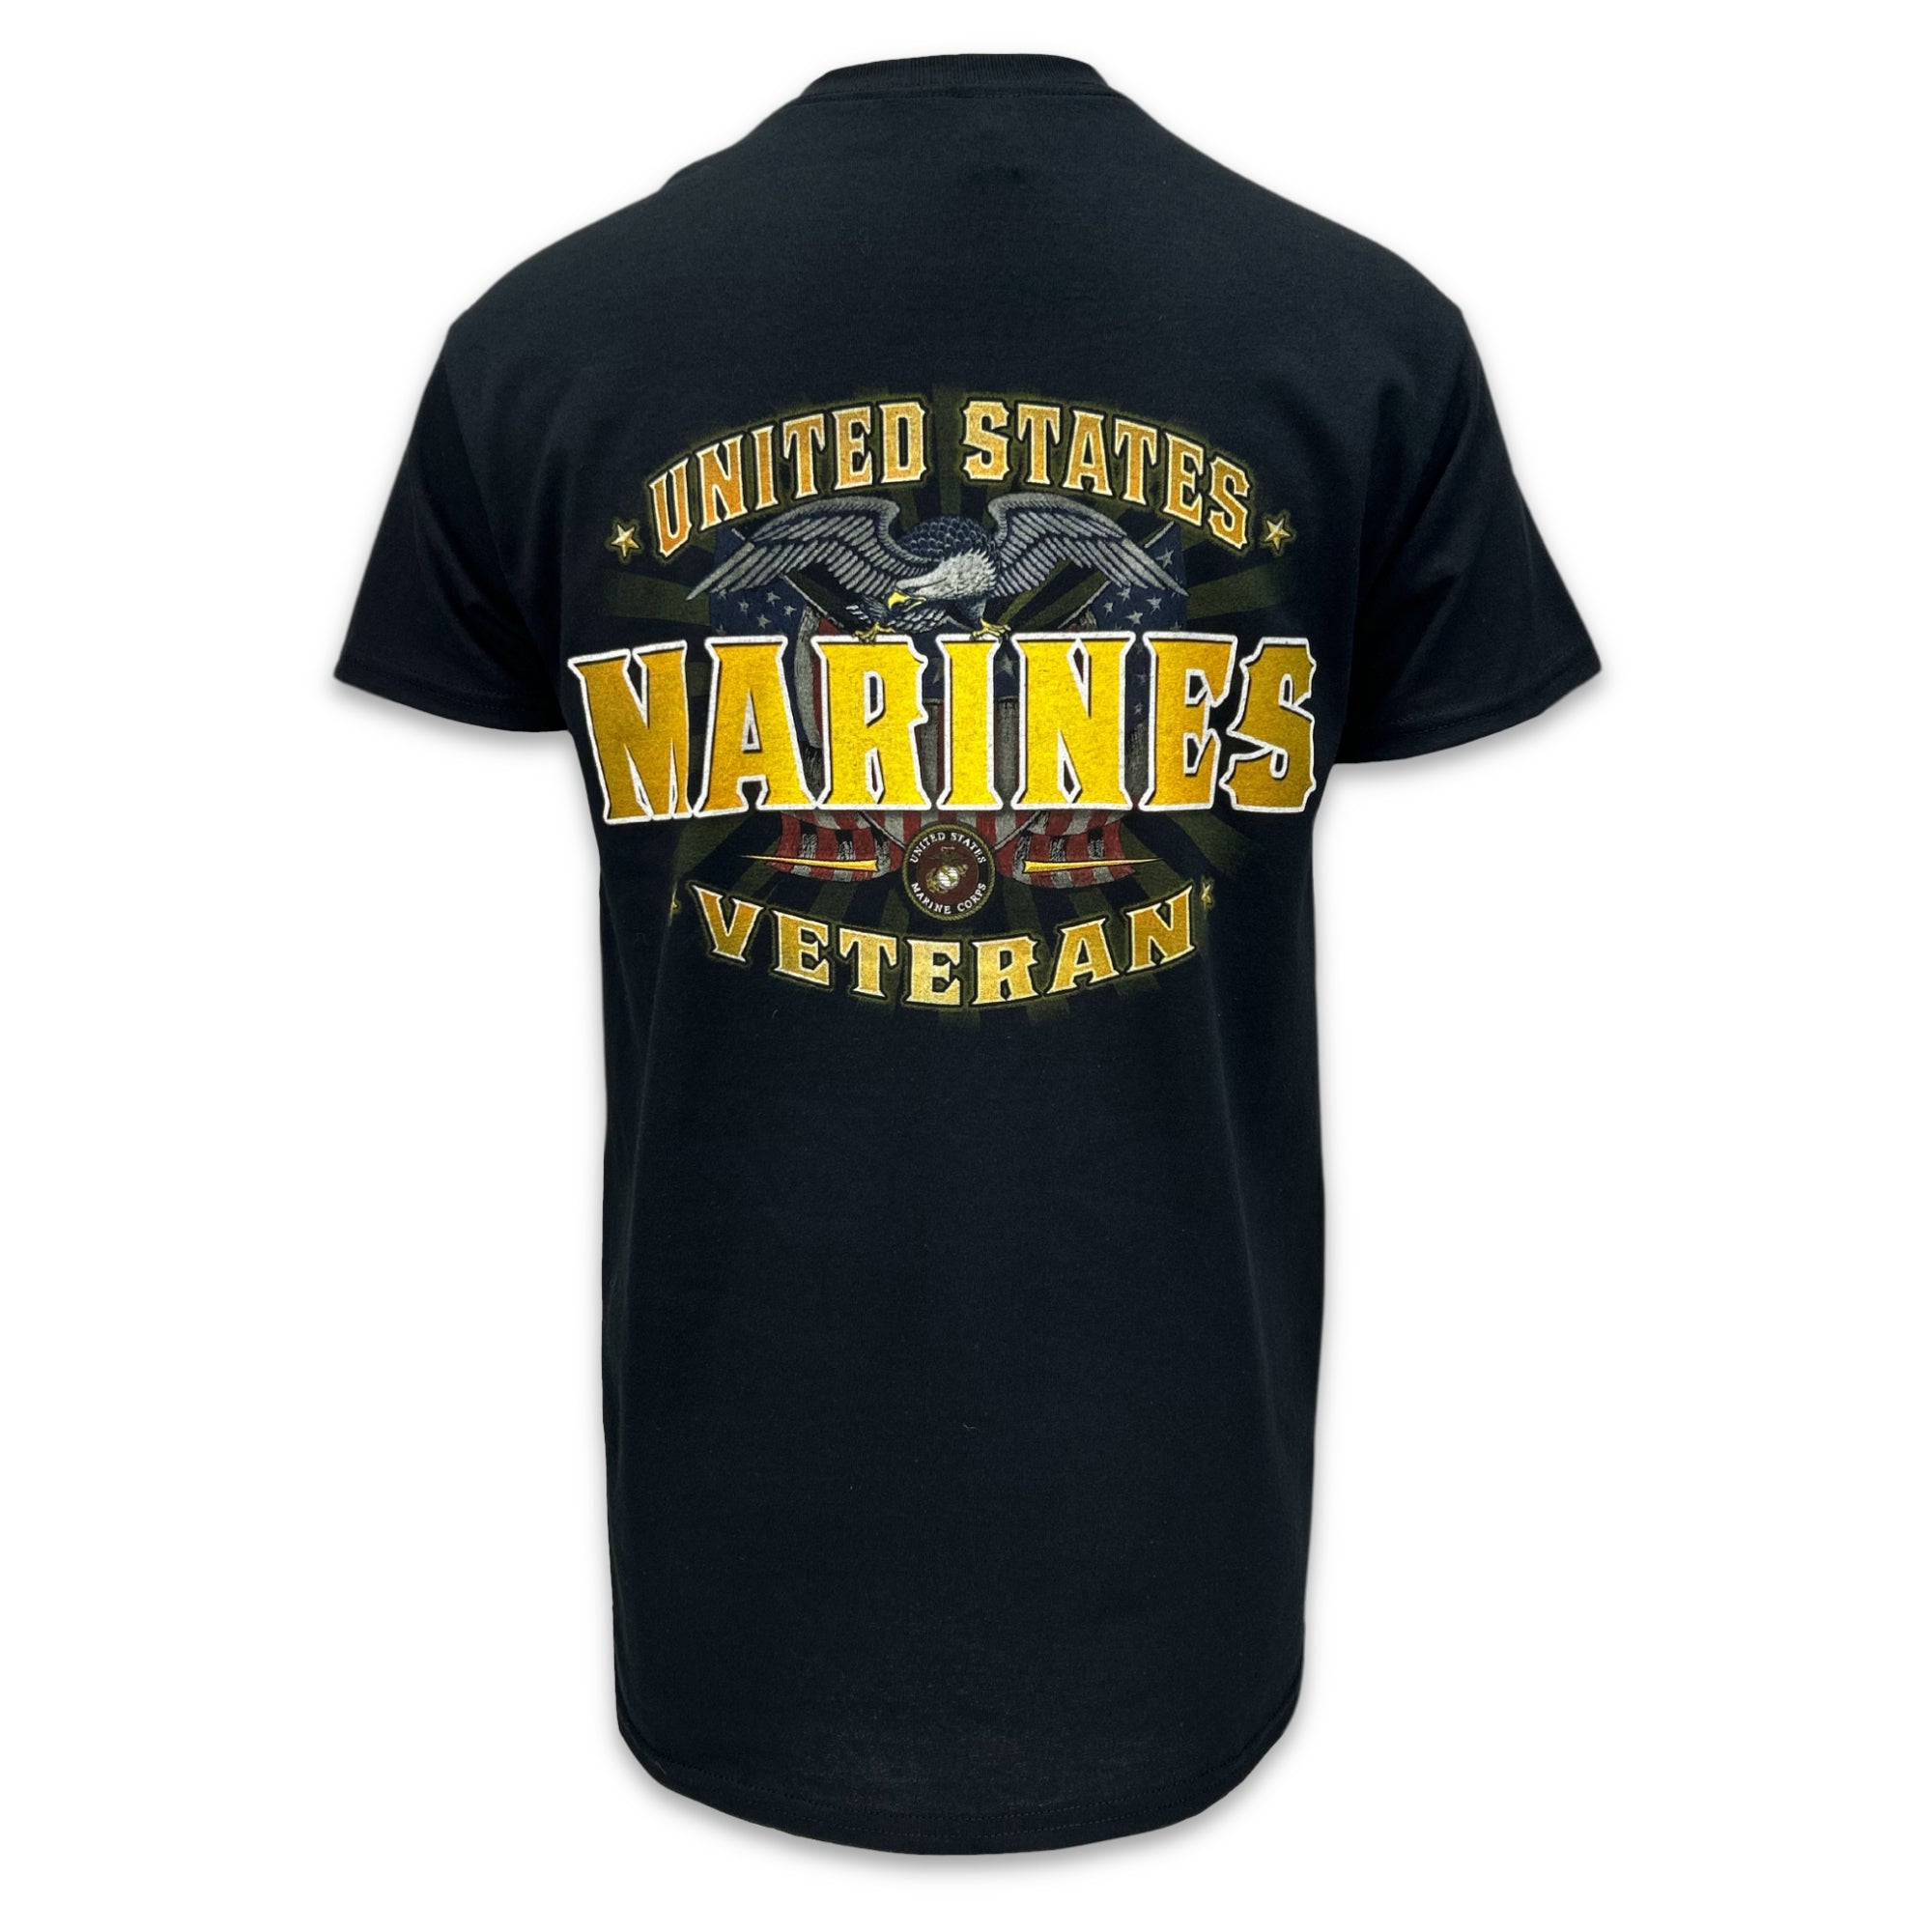 United States Marines Veteran Perched Eagle T-Shirt (Black)